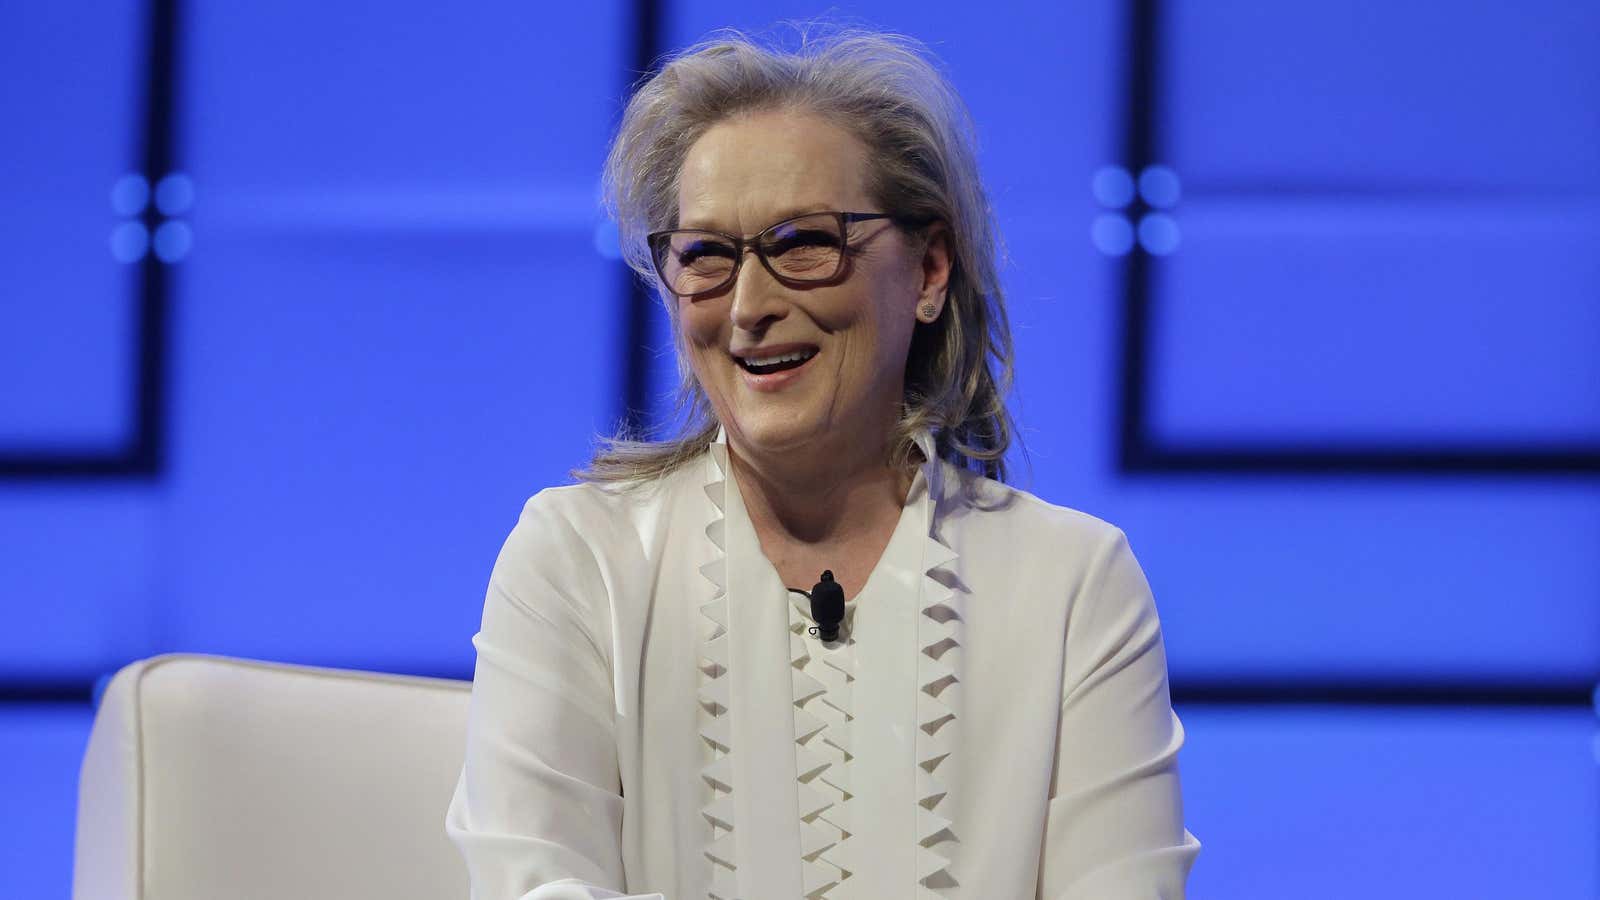 Meryl Streep says the key to women’s empowerment isn’t so mysterious.